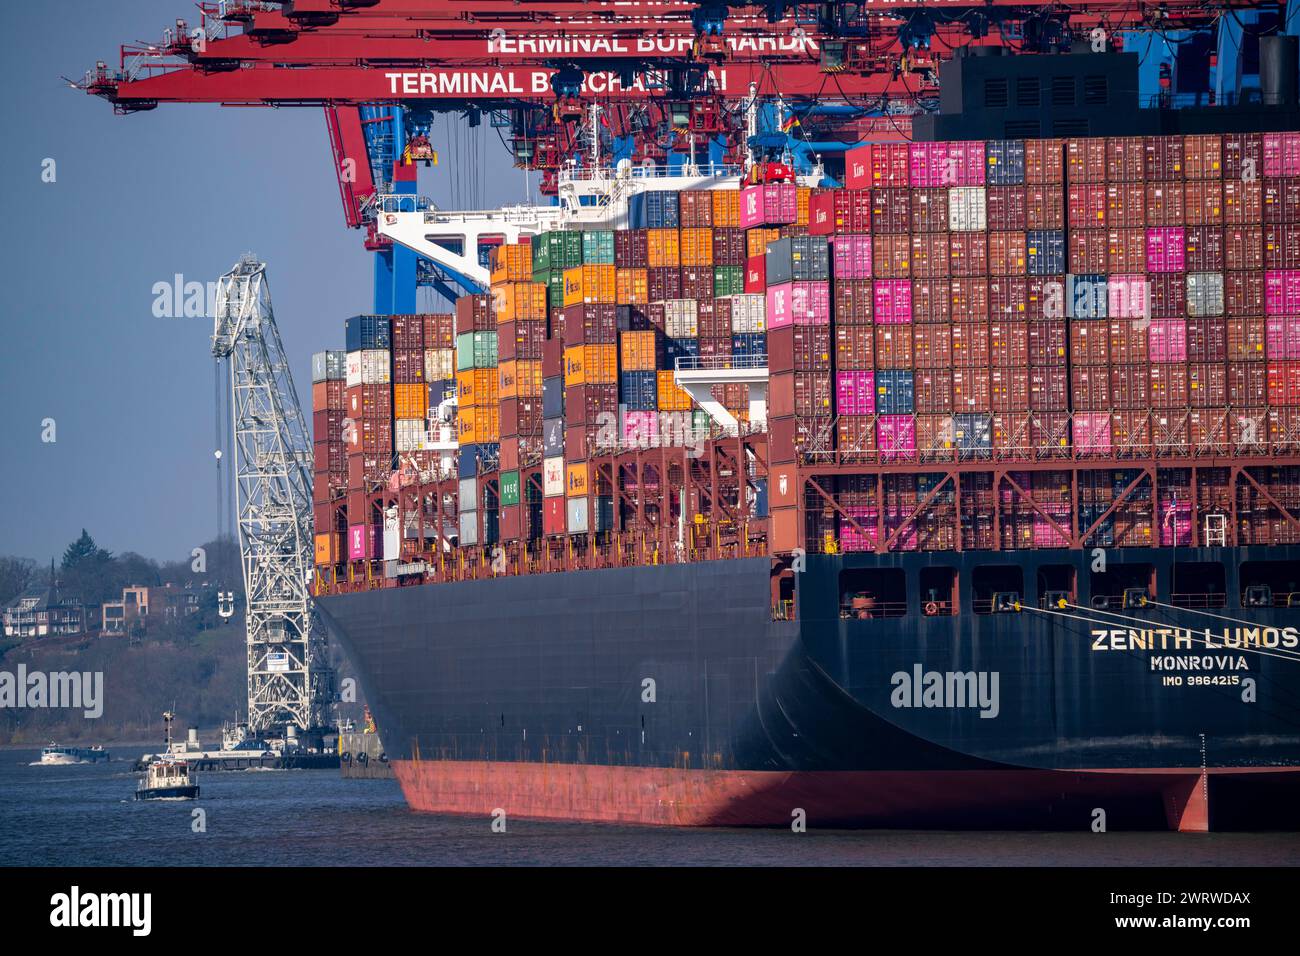 Porto di Amburgo, Waltershofer Hafen, HHLA Container Terminal Burchardkai, cargo container Zenith Lumos, Amburgo, Germania Foto Stock